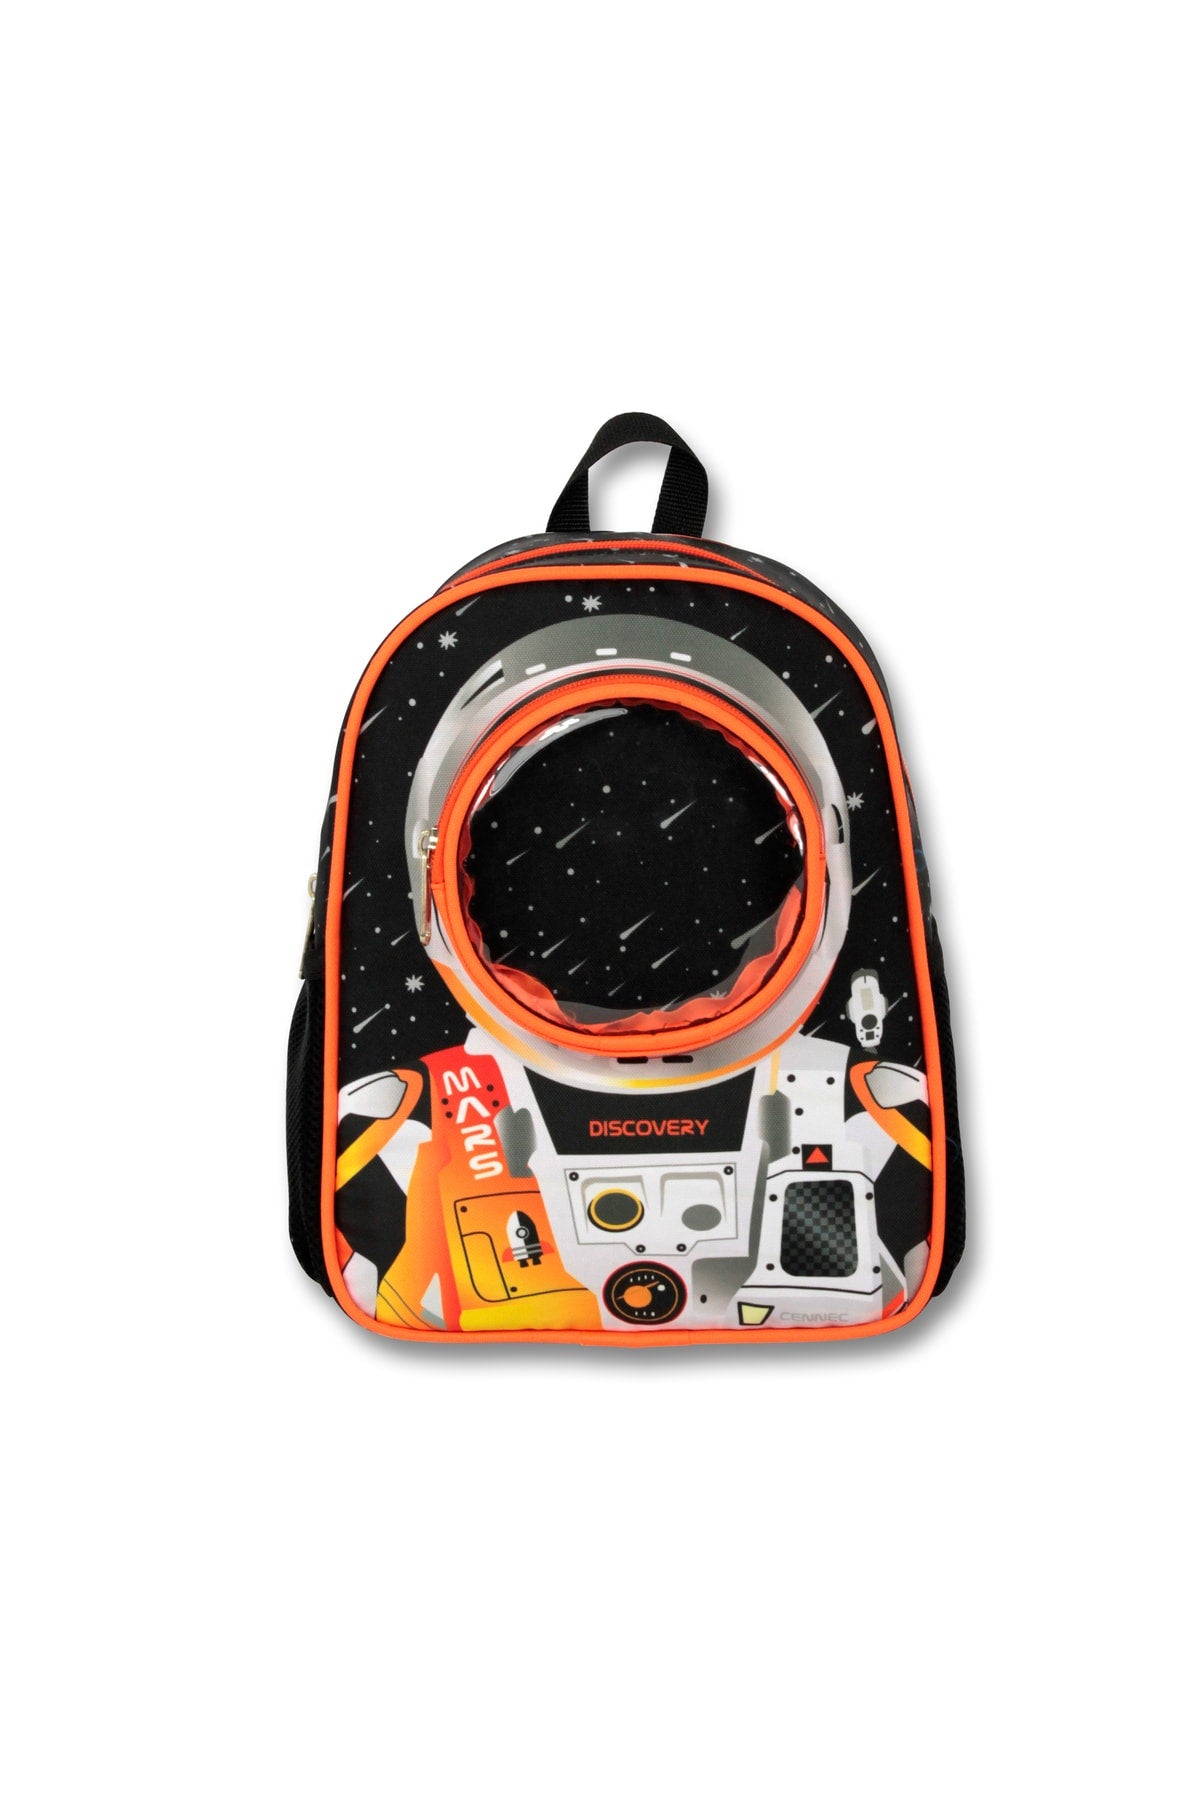 -Umit Bag Astronaut Kindergarten Bag Lunch And Pencil Bag Set